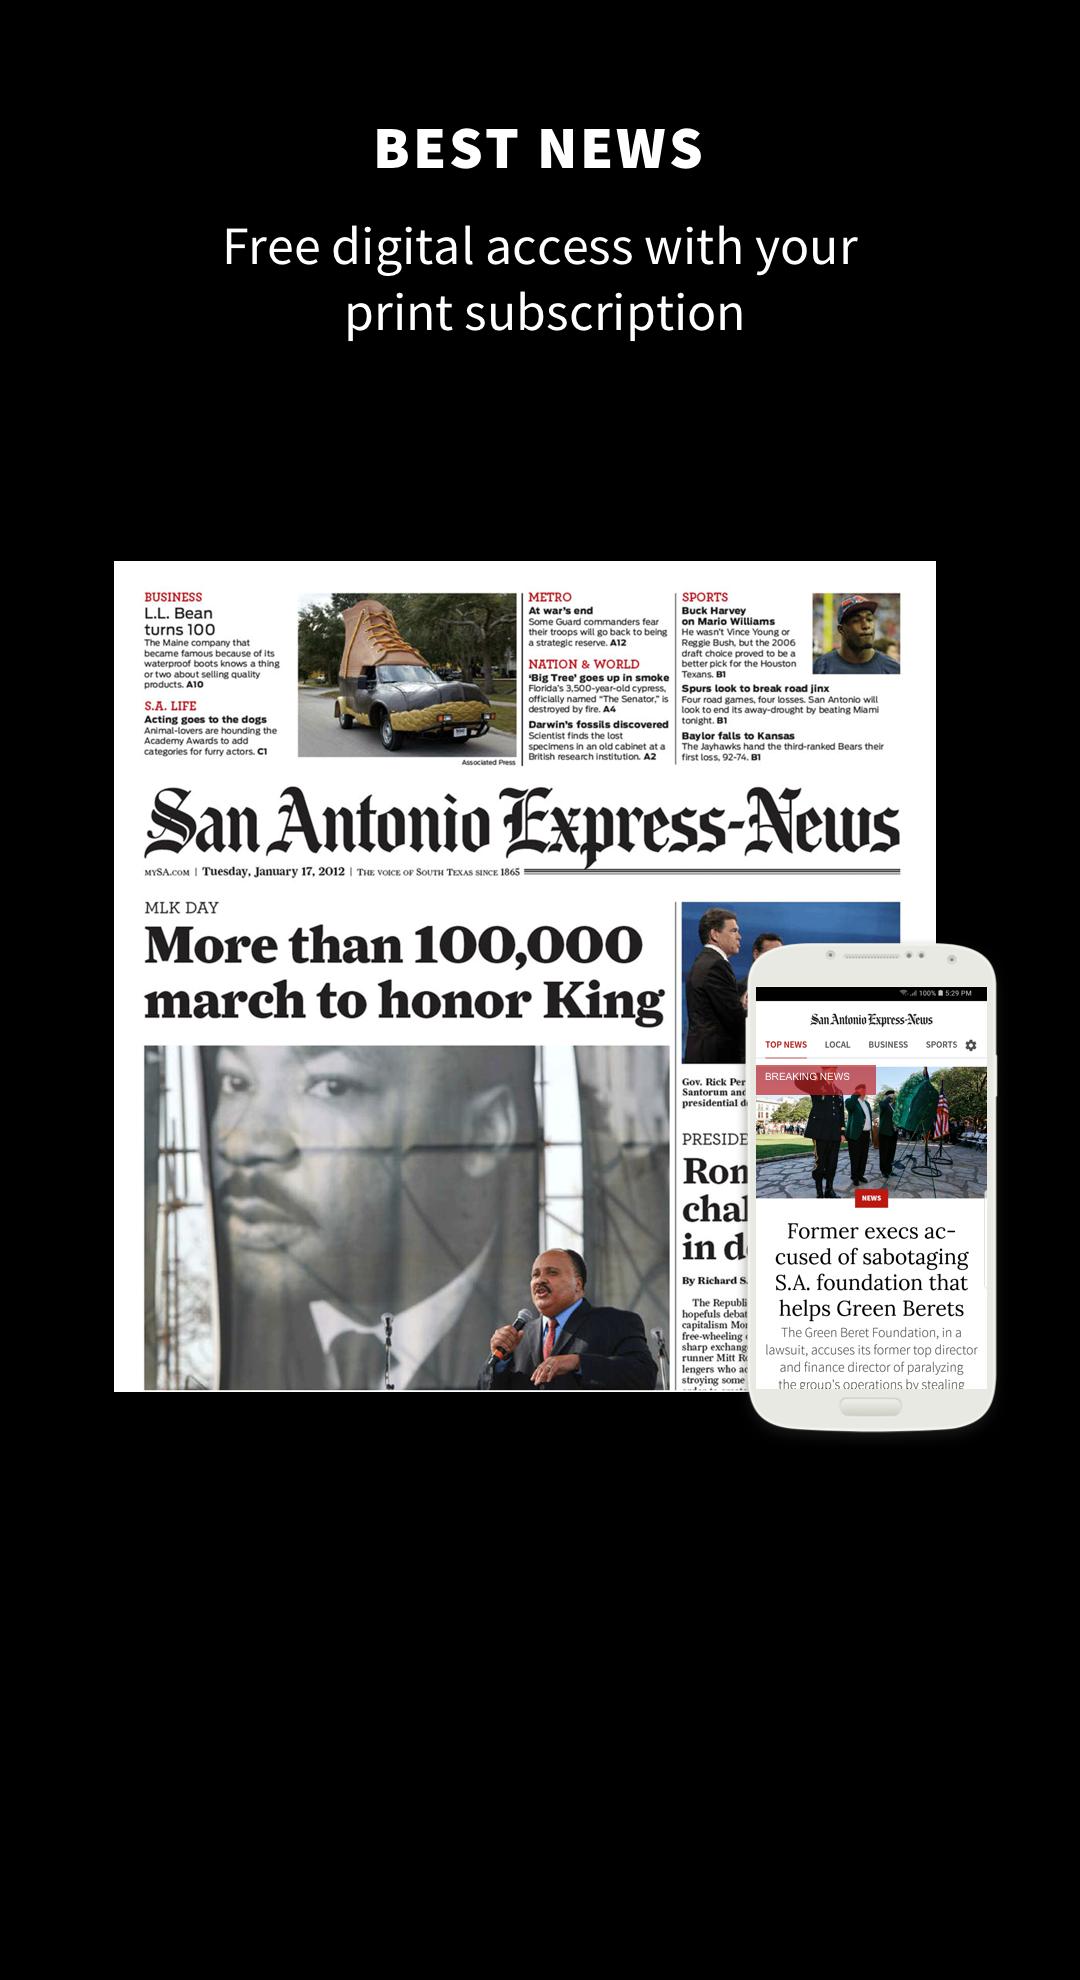 San Antonio Express-News 202106.16 Screenshot 4